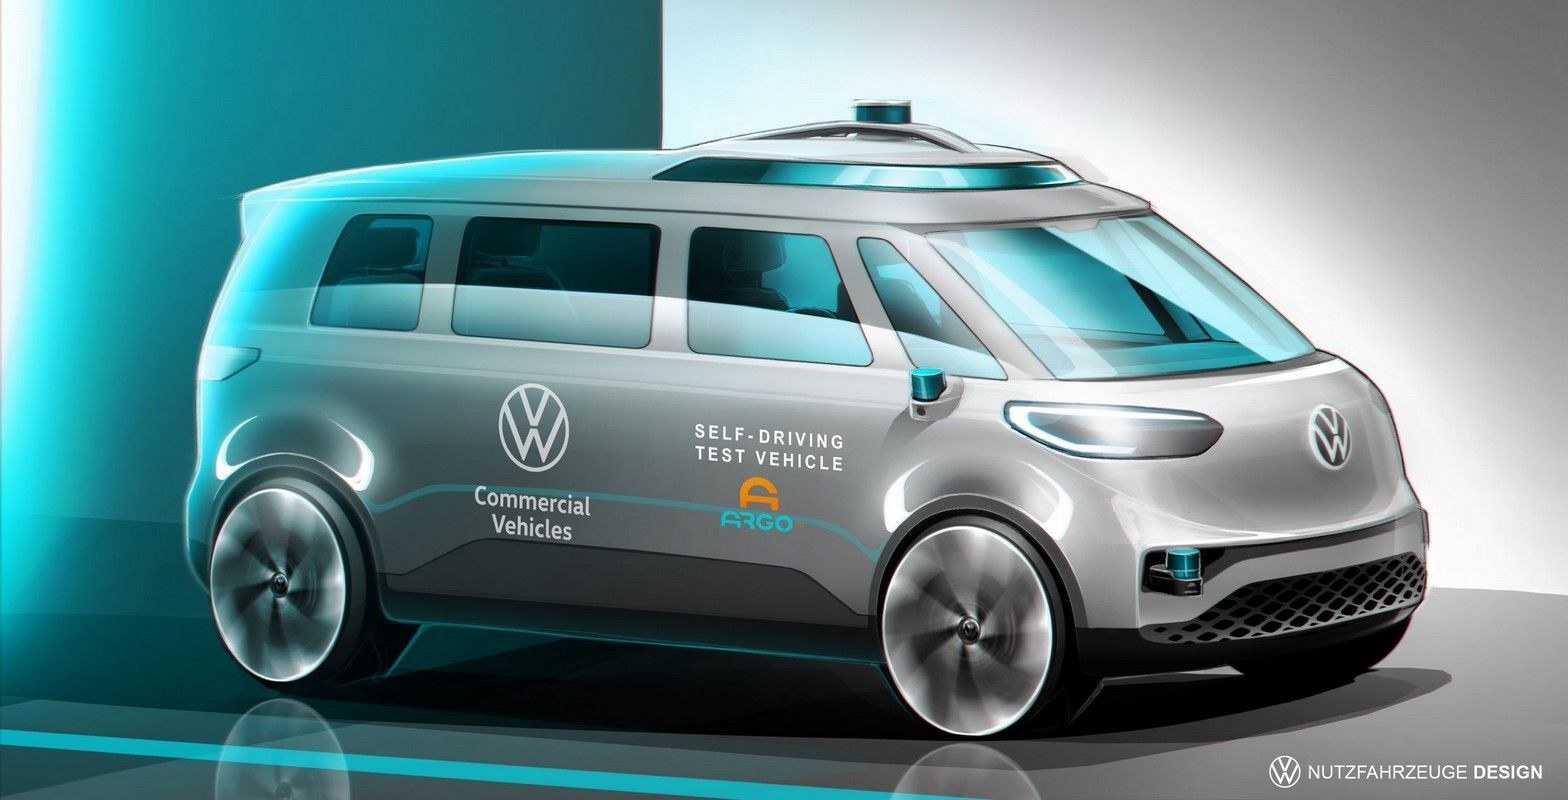 Volkswagen autonomní technologie